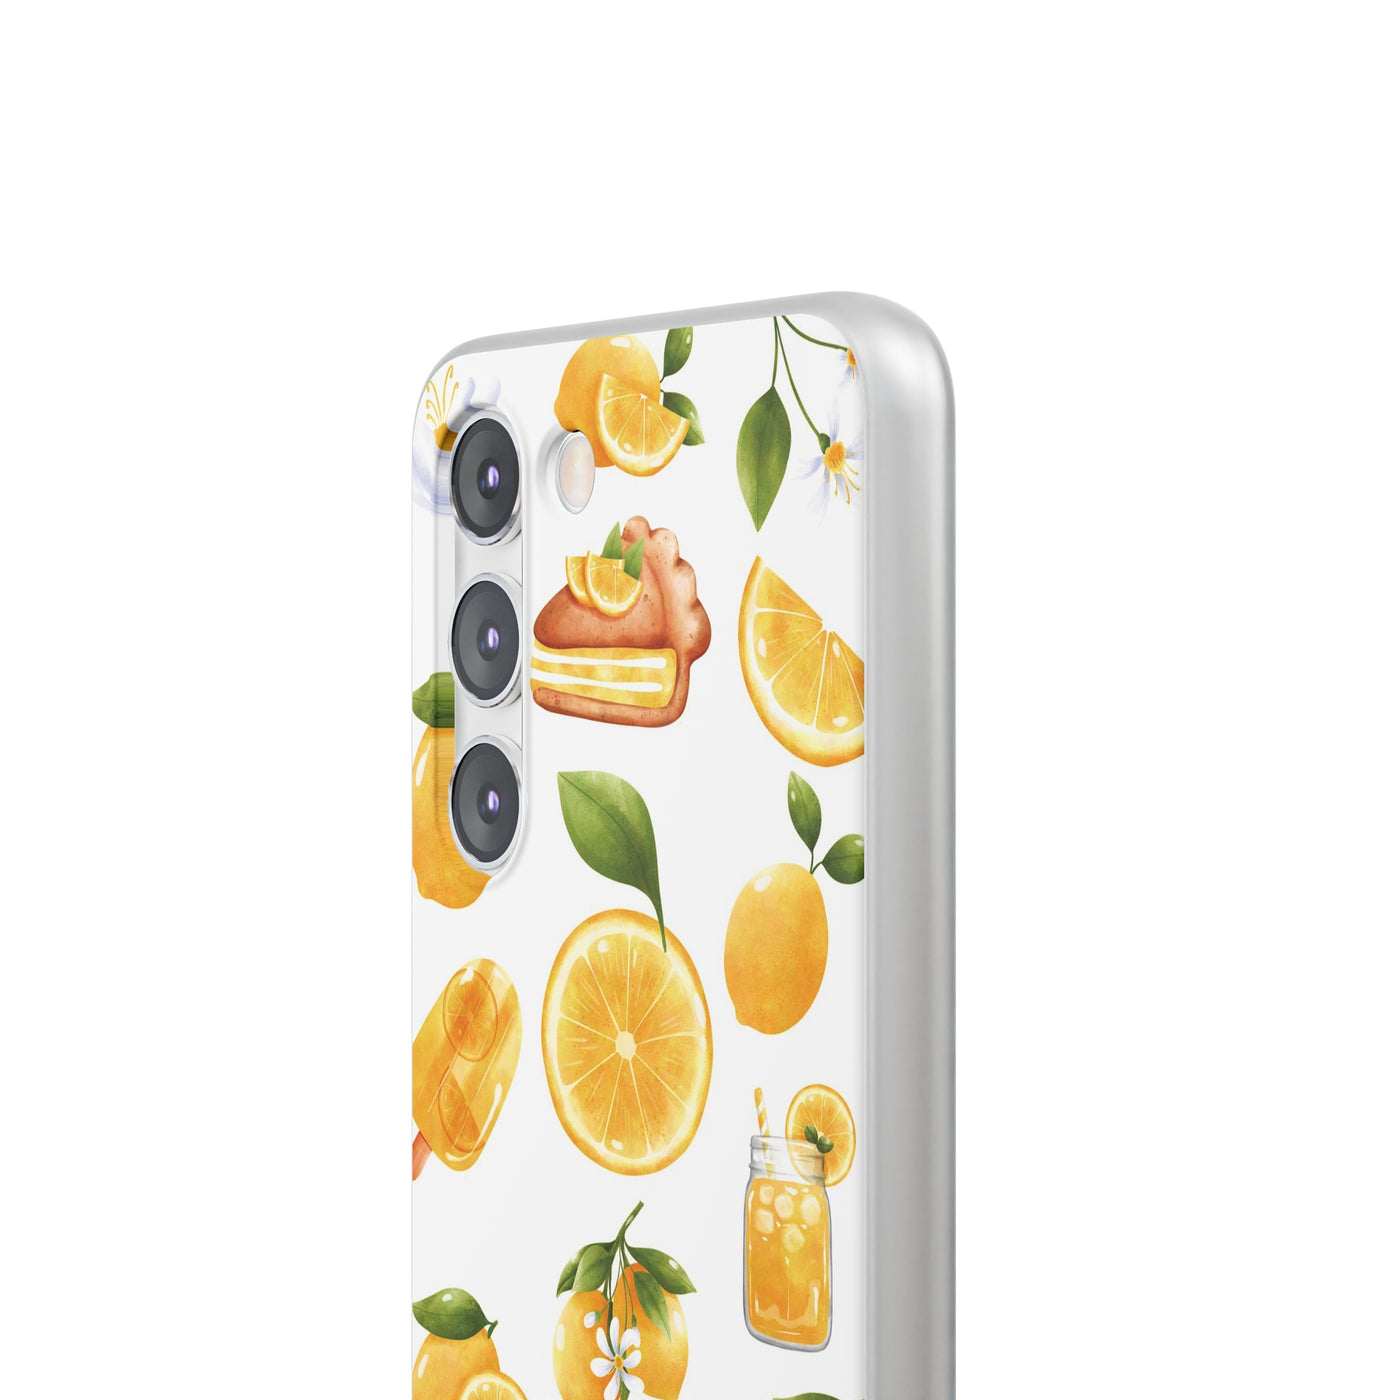 Cute Flexi Samsung Phone Cases, Summer Fruit Lemon Galaxy S23 Phone Case, Samsung S22 Case, Samsung S21 Case, S20 Plus